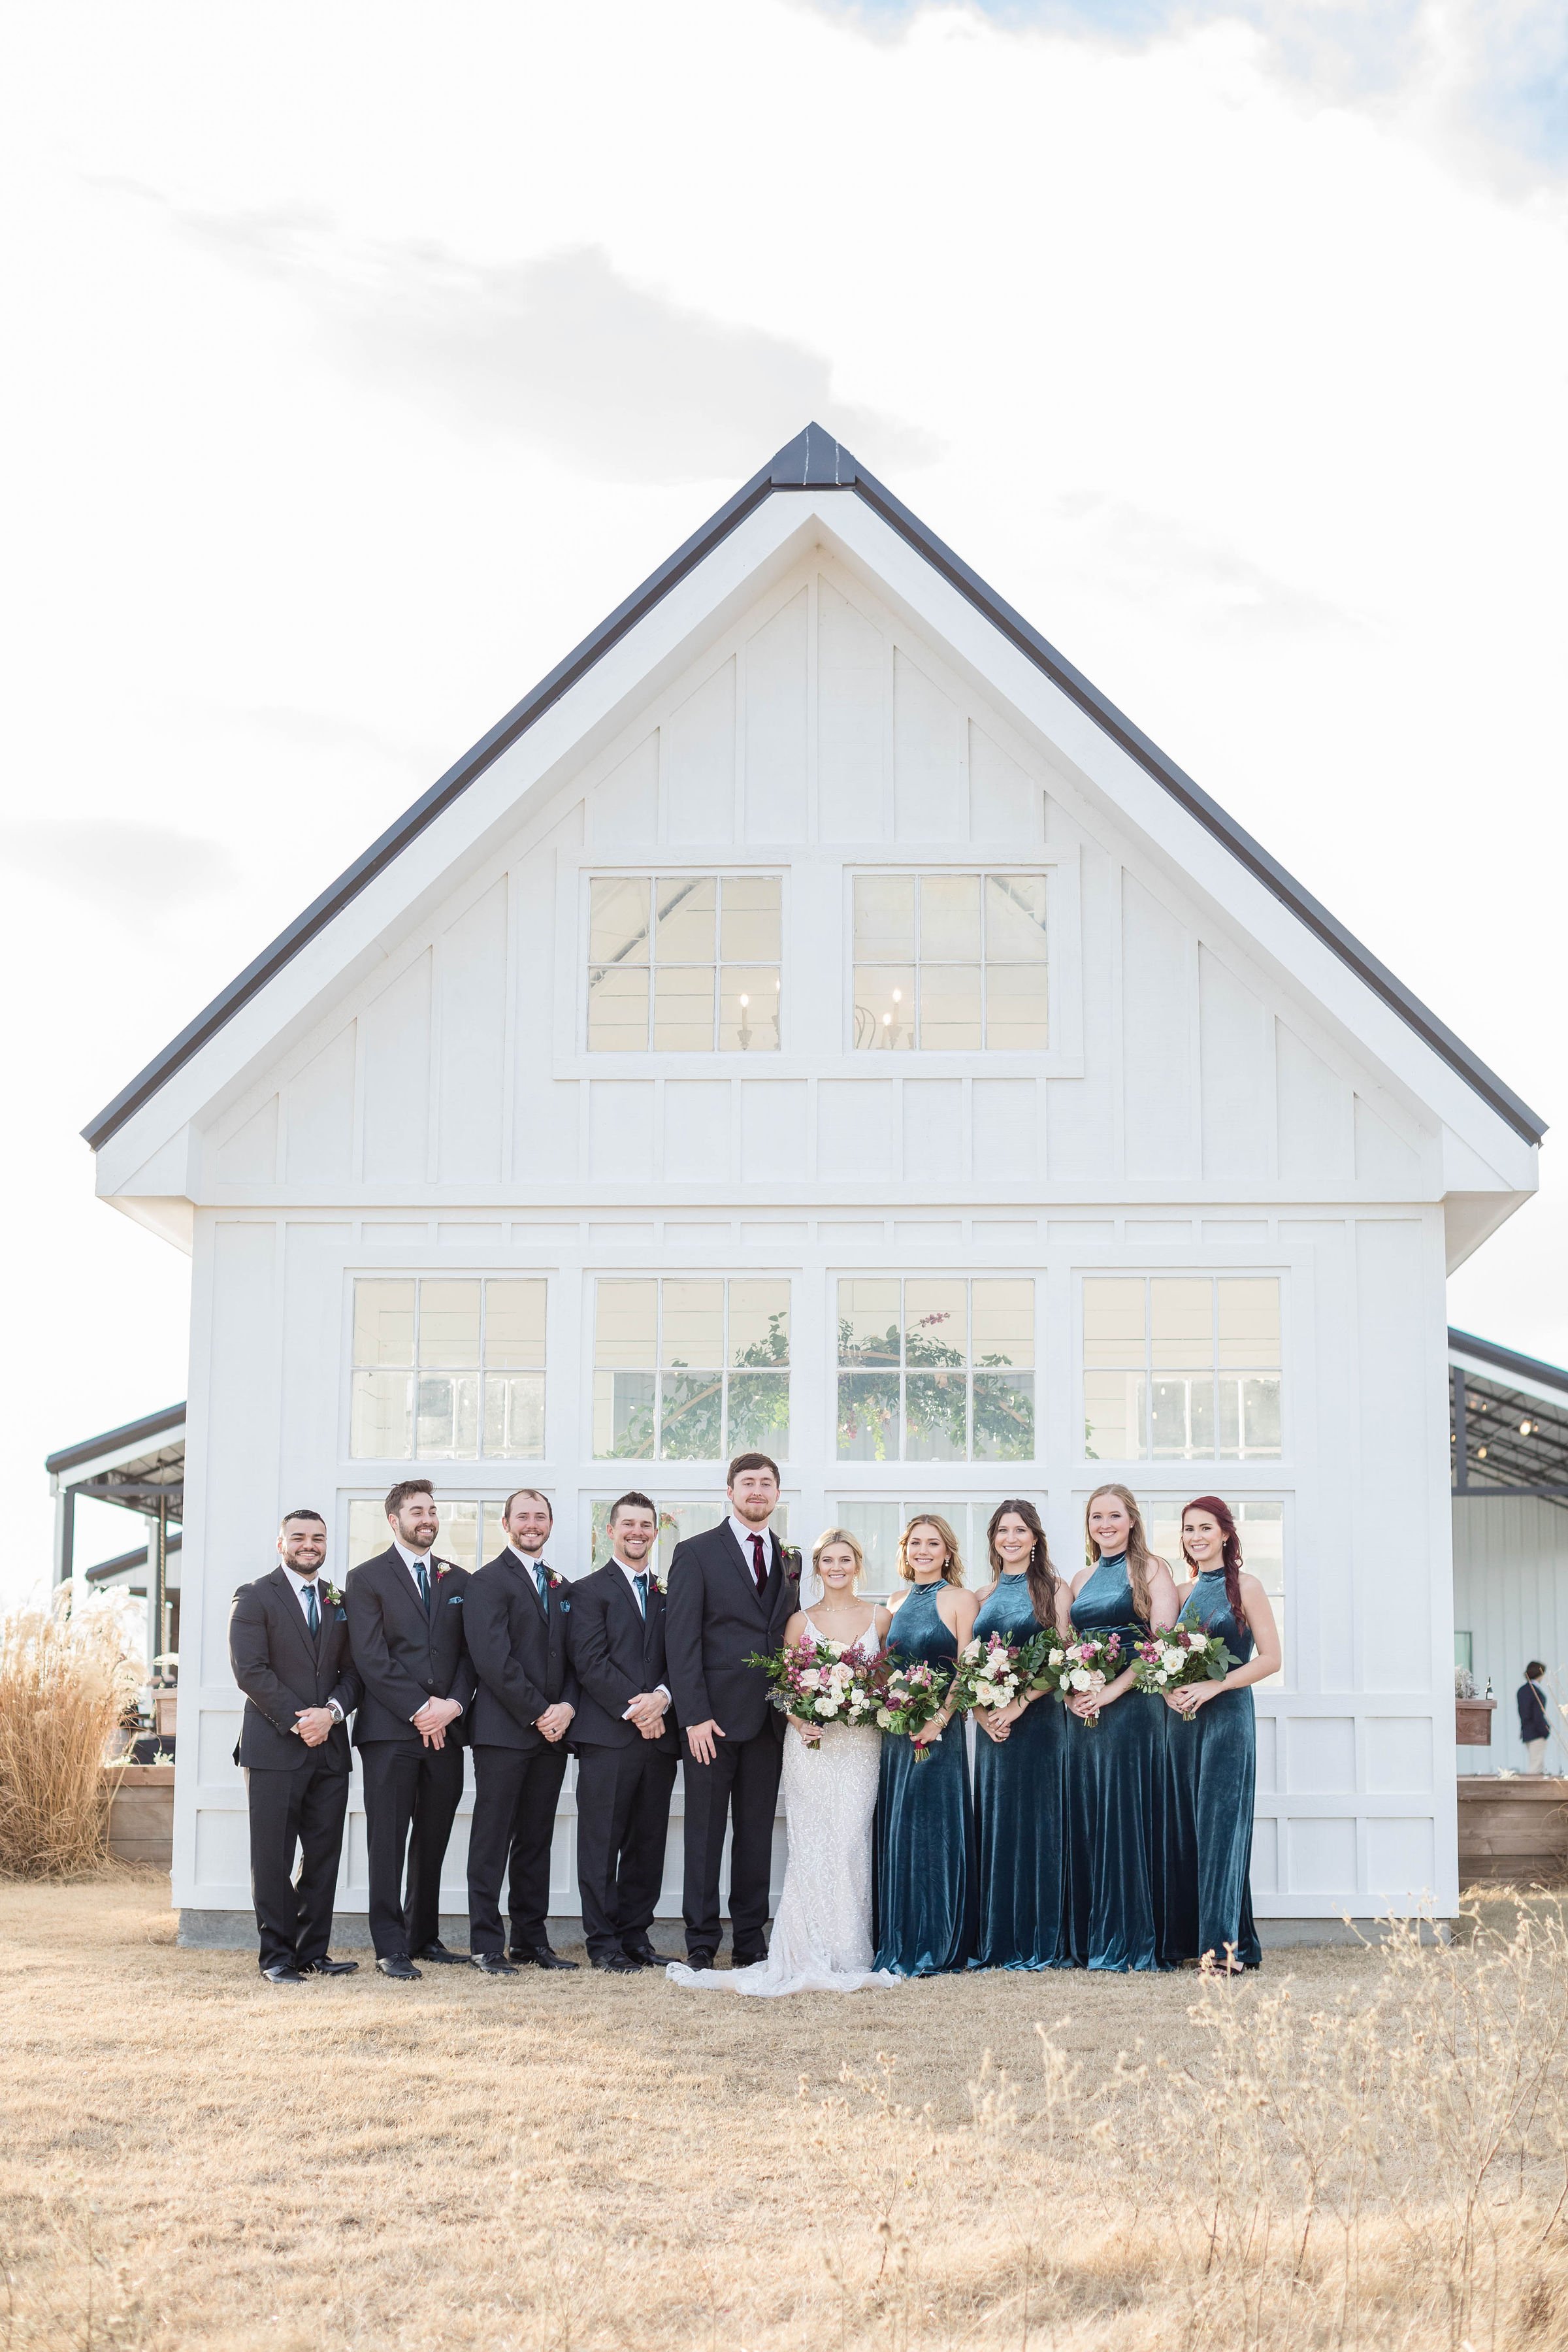 Waldrop-wedding-bushel-peck-photo-davis-grey-farms-446.jpg